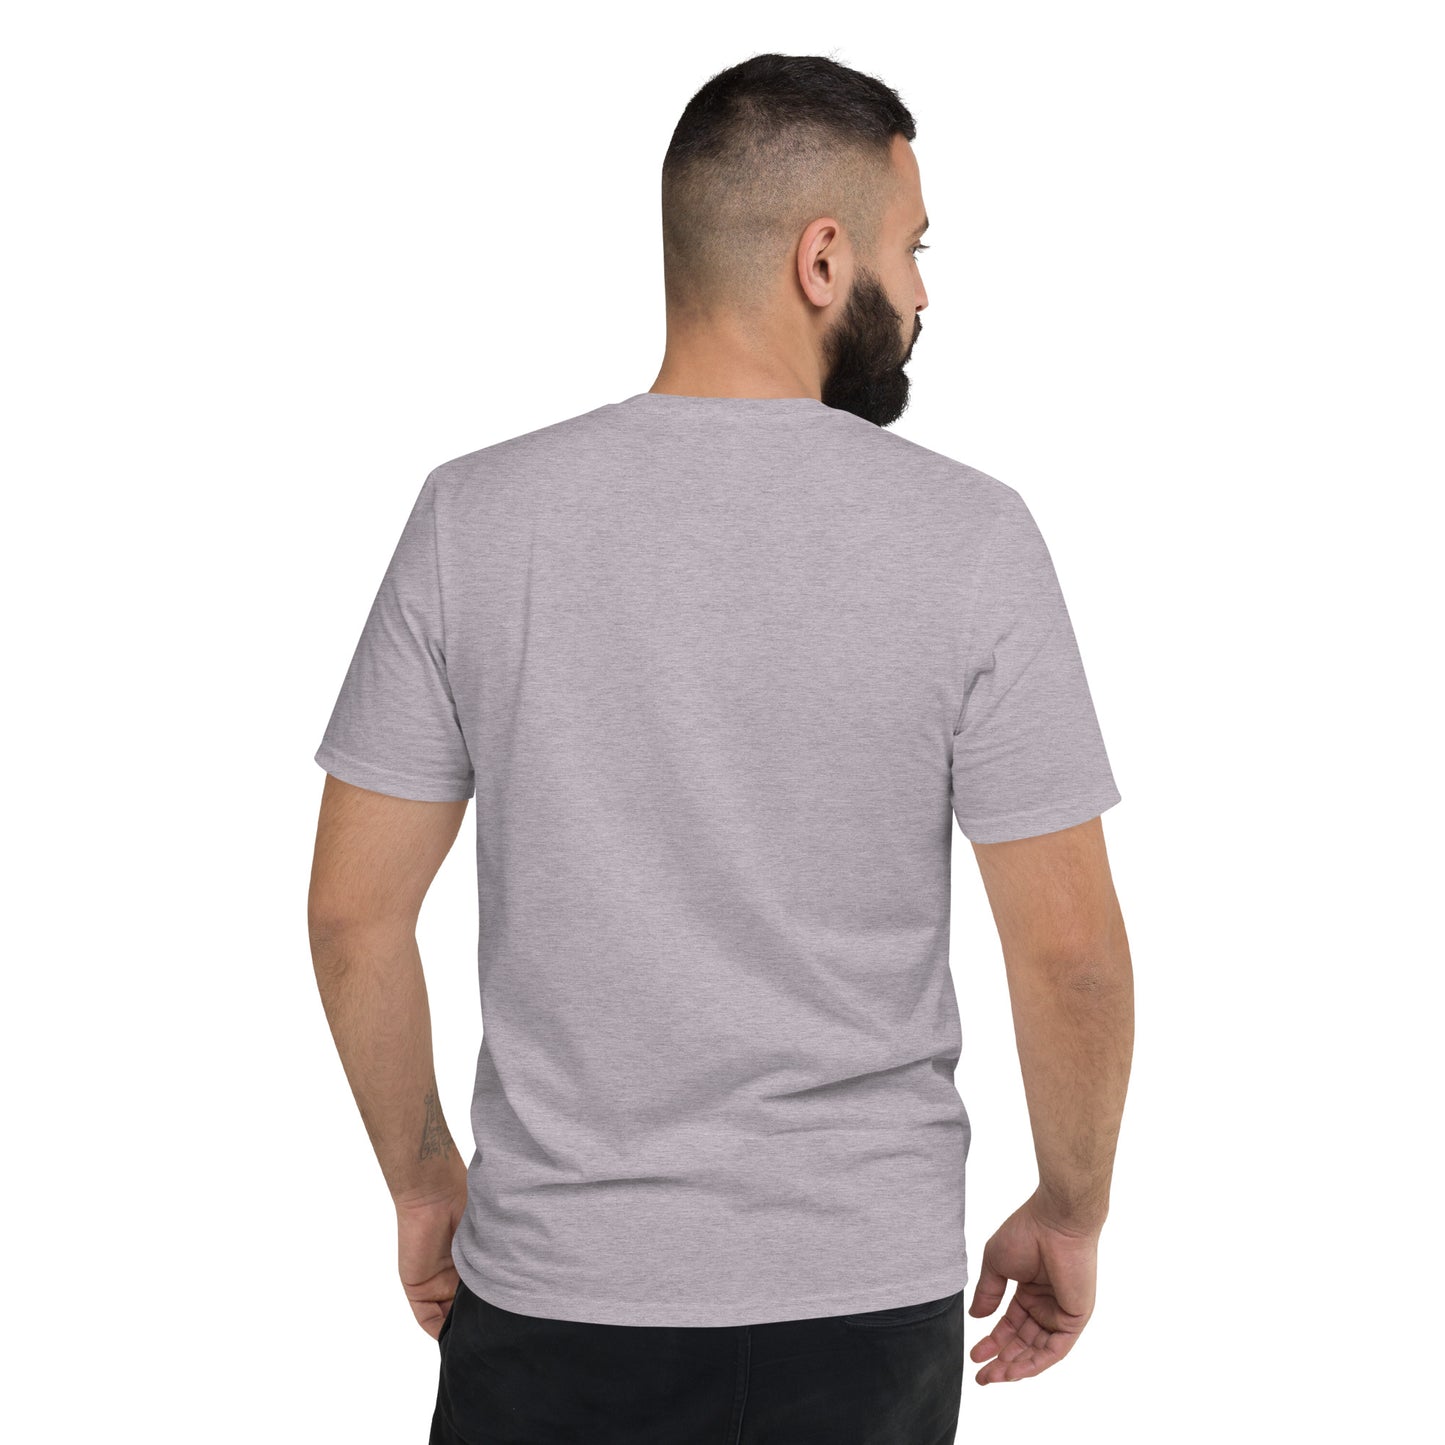 Cheer Short-Sleeve T-Shirt